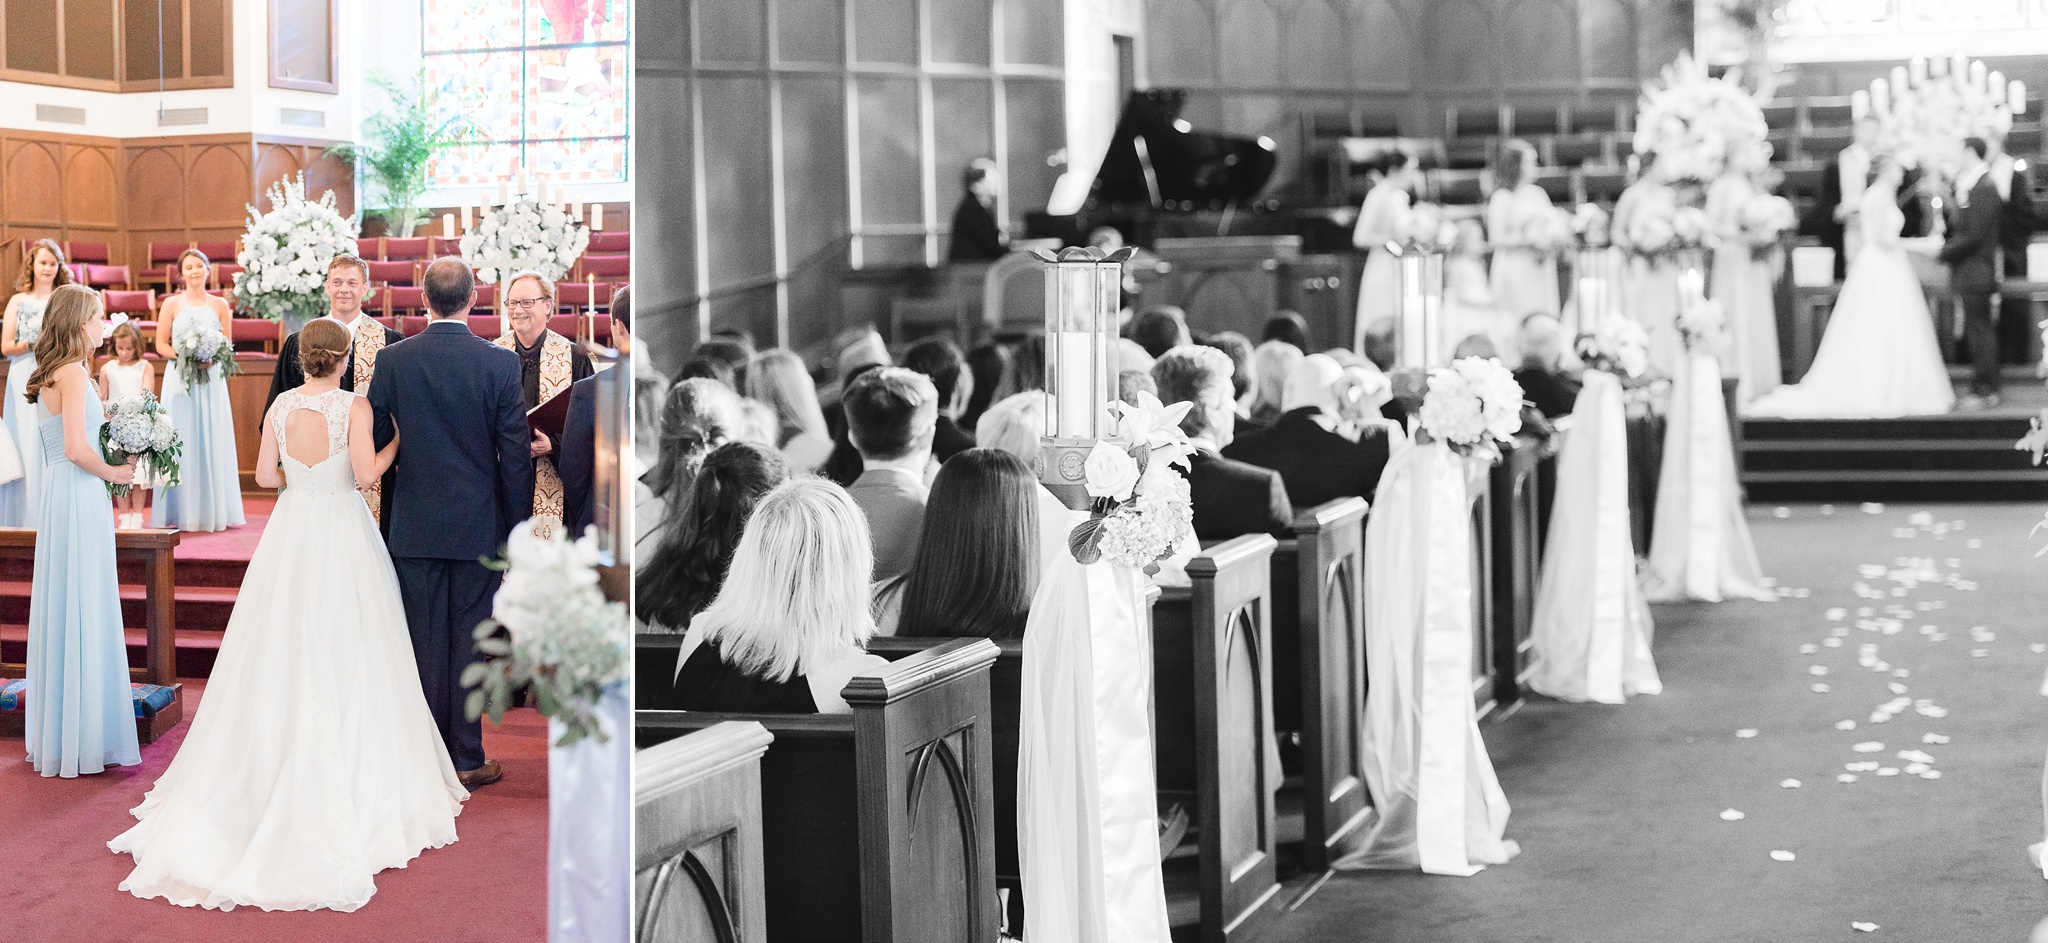 Aldridge Gardens Riverchase United Methodist Hoover Wedding | Birmingham Alabama Wedding Photographer_0049.jpg